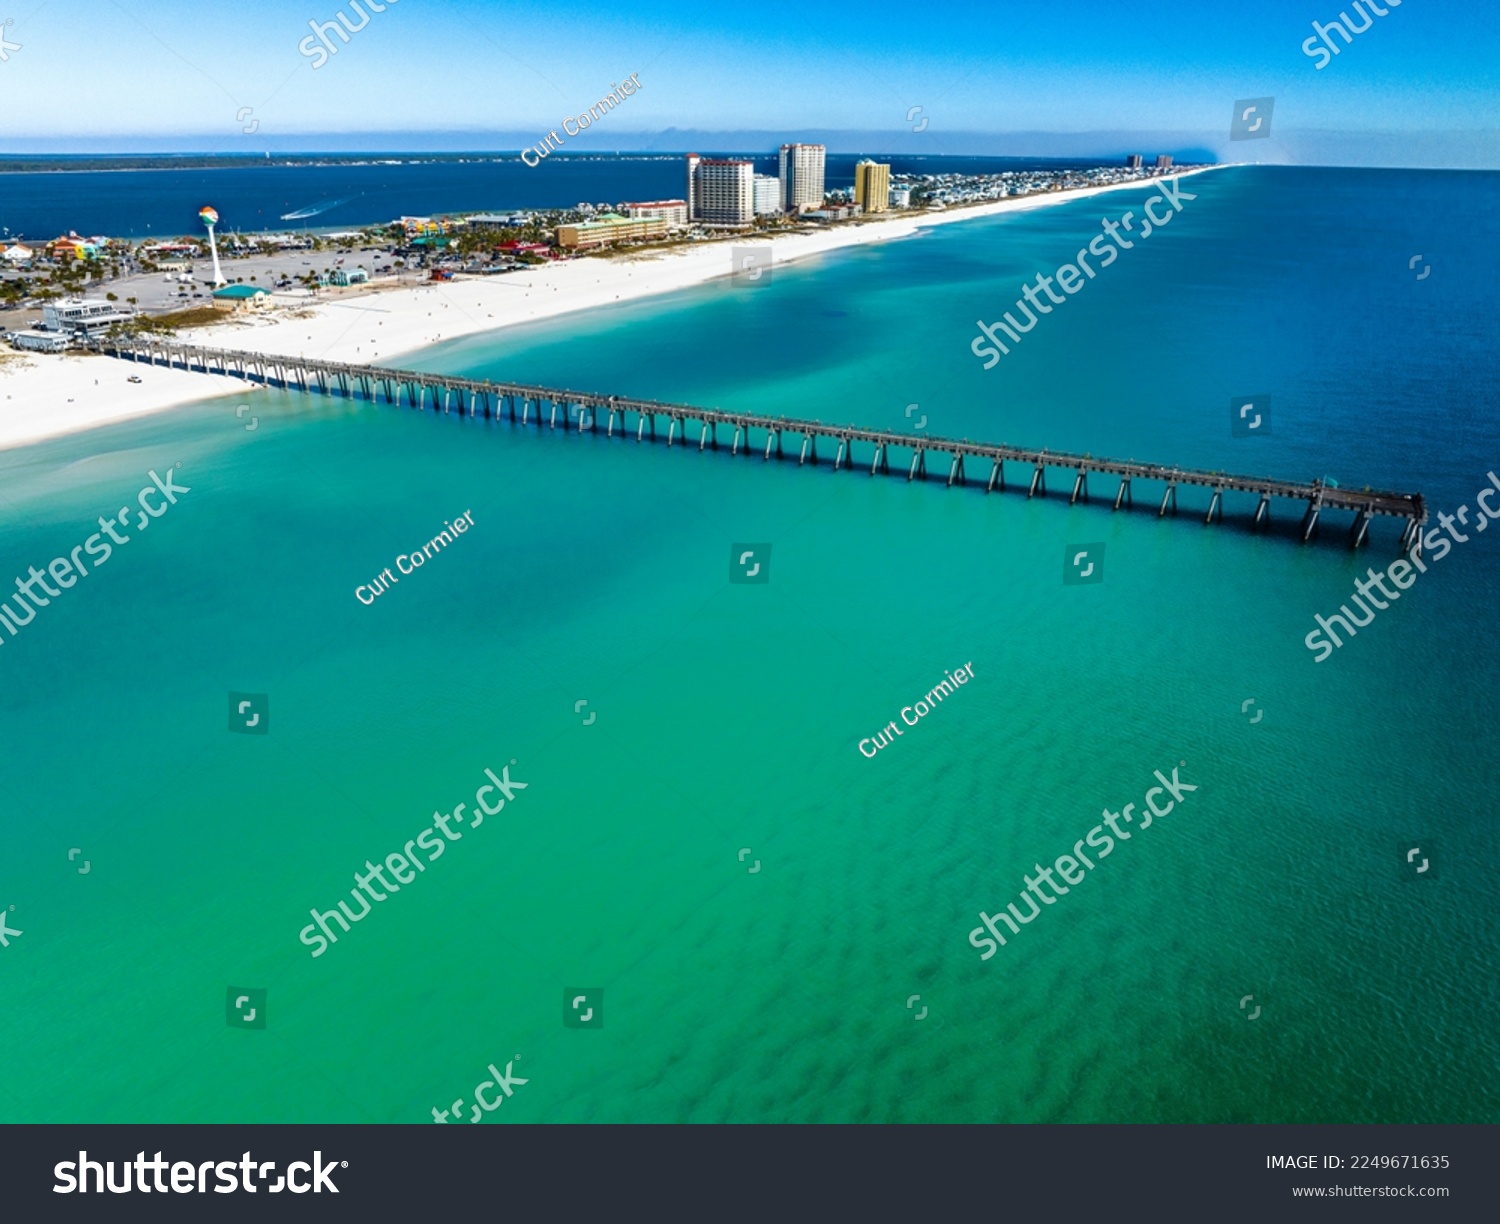 Pensacola Beach from the Pier #2249671635